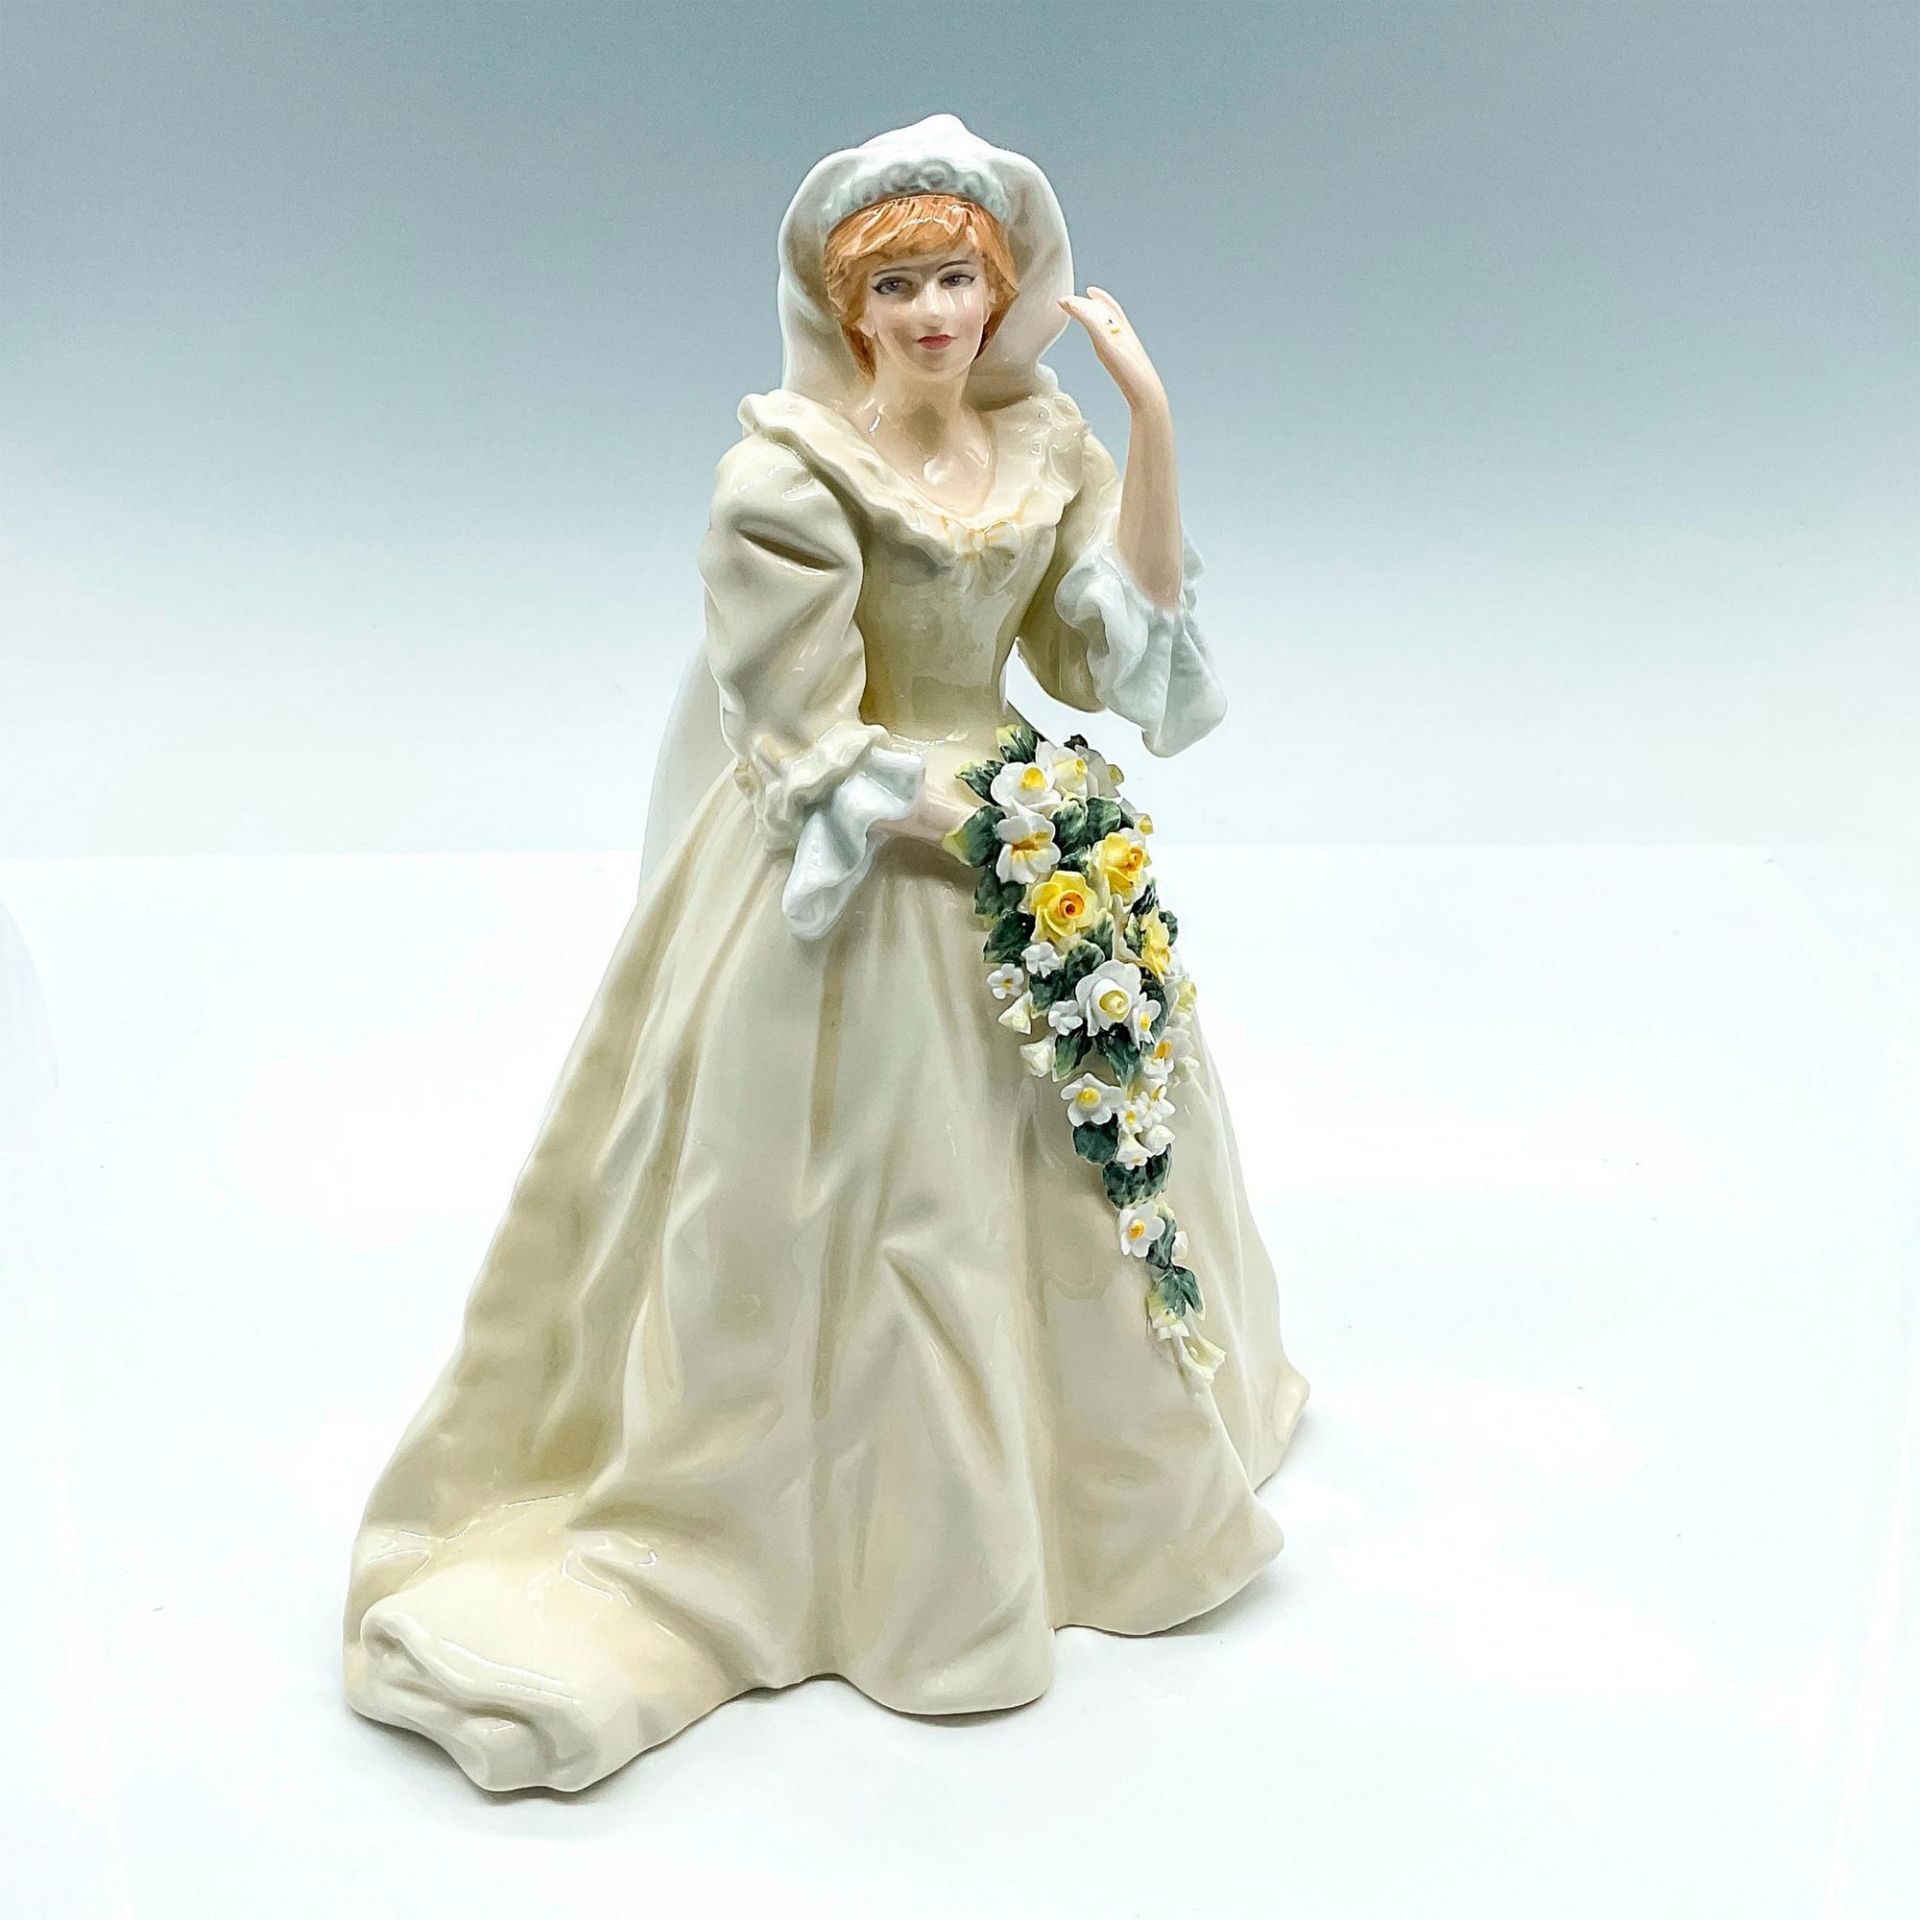 Princess of Wales - HN2887 - Royal Doulton Figurine